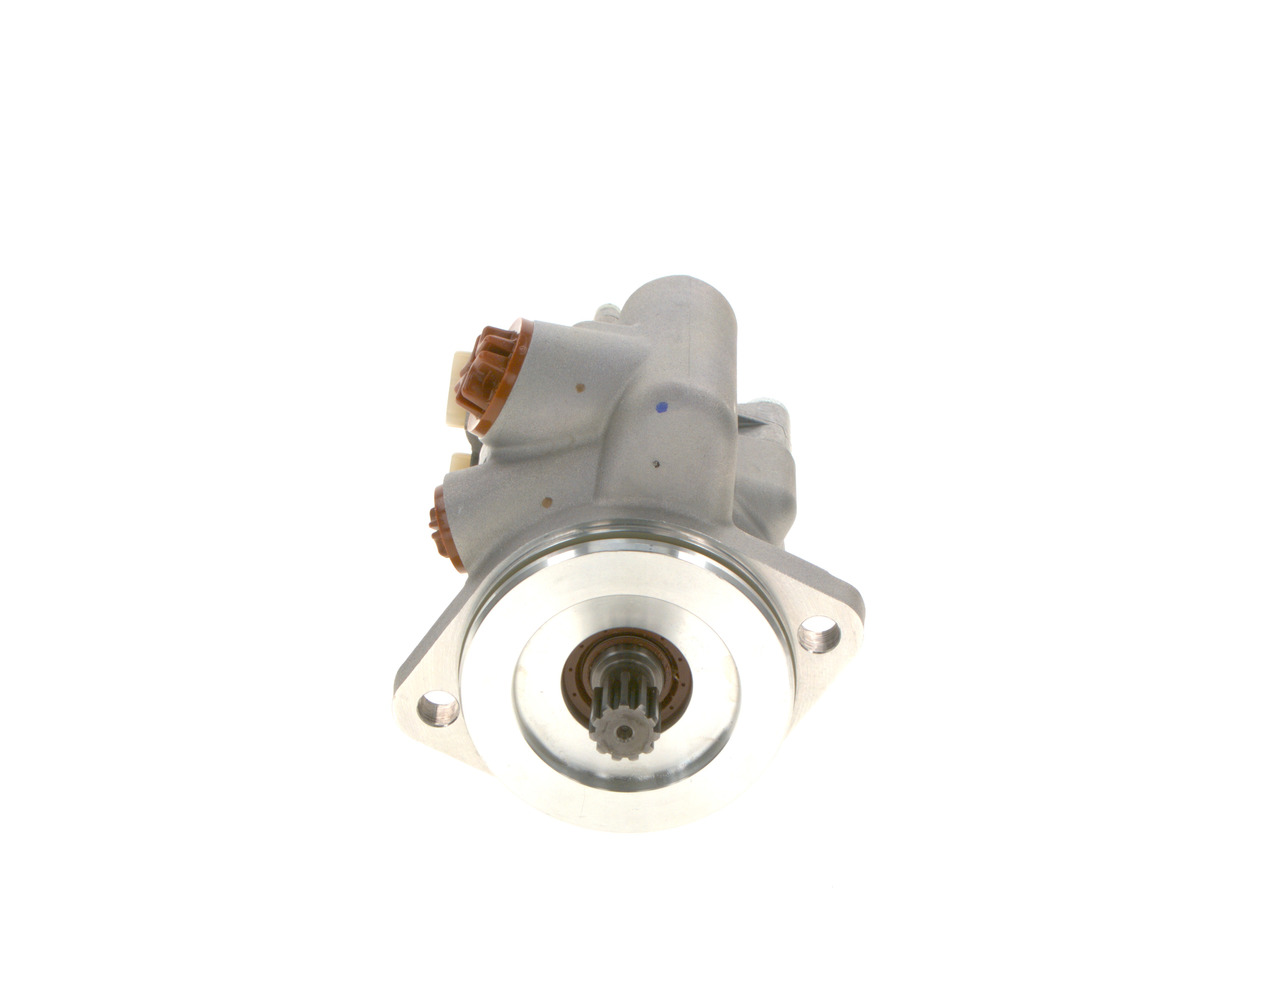 BOSCH K S01 002 285 Power steering pump Hydraulic, Pressure-limiting Valve, Tandem Pump, Anticlockwise rotation